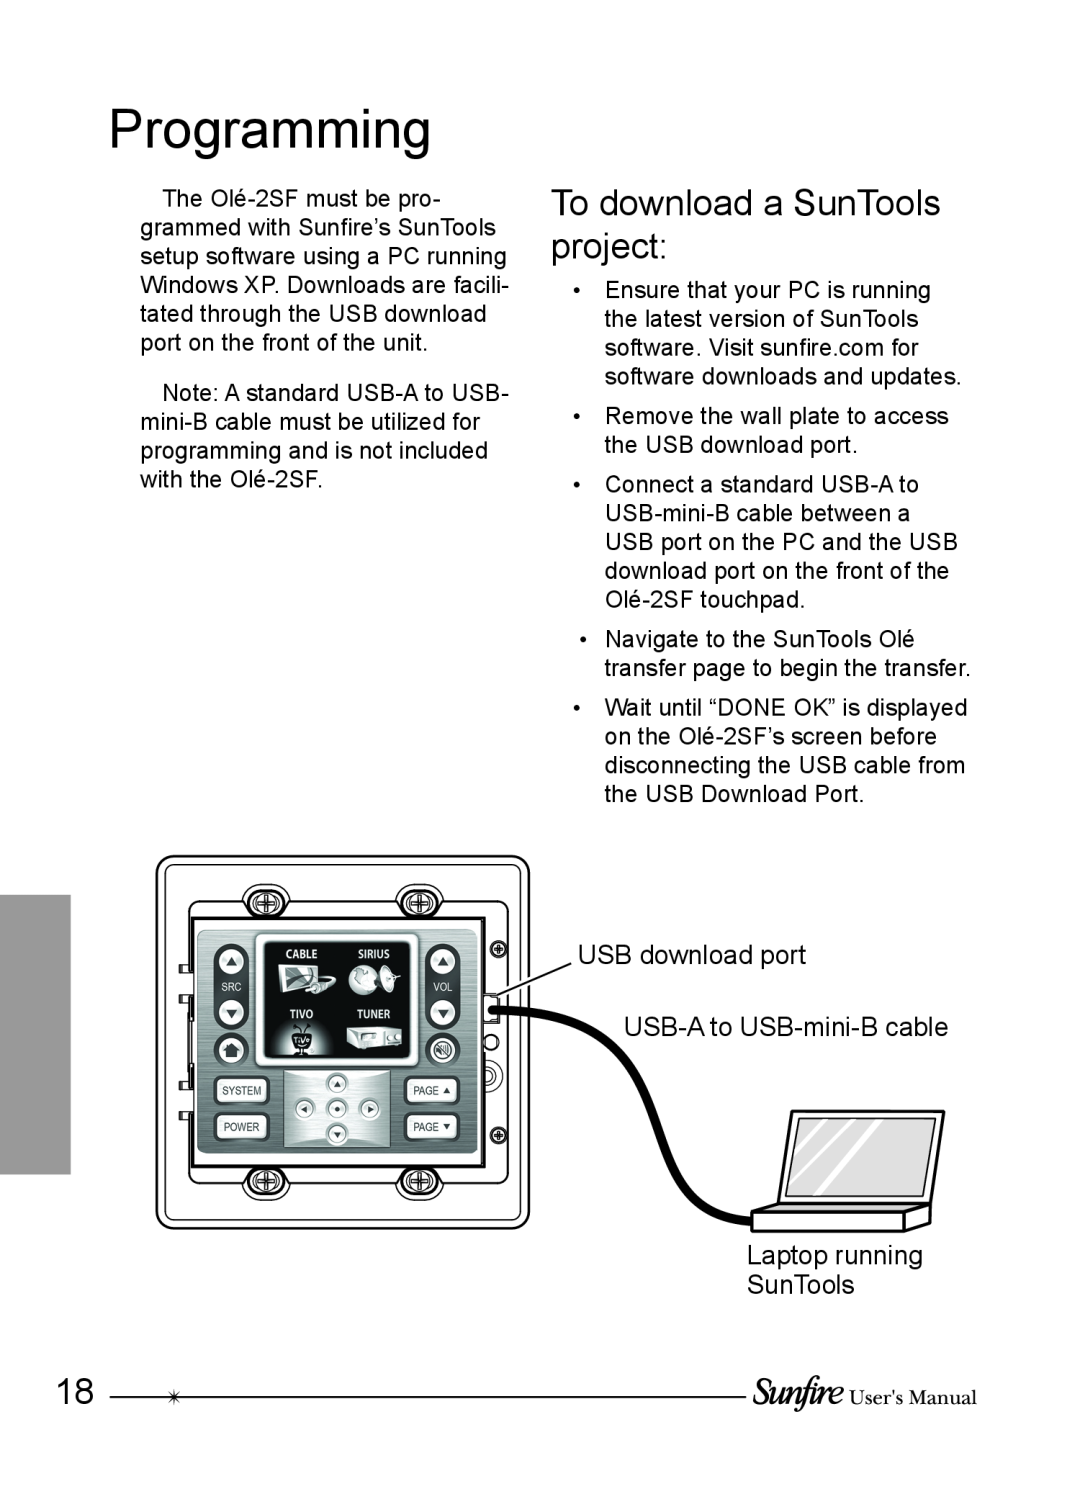 Sunfire OLE-2SF manual Programming, To download a SunTools project, USB download port USB-Ato USB-mini-Bcable 